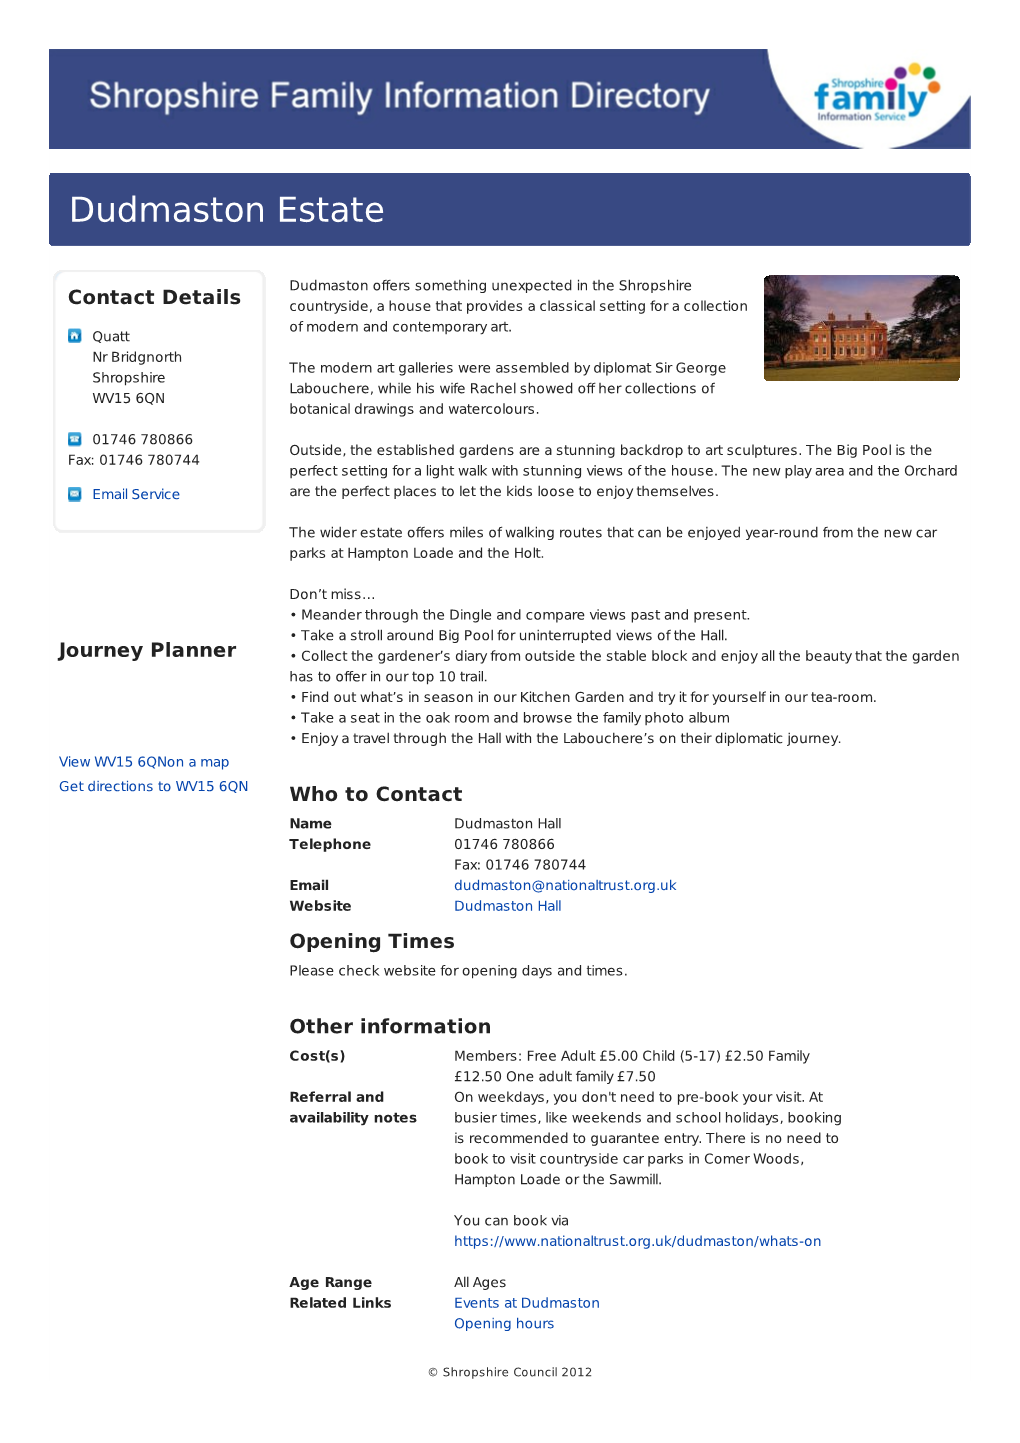 Dudmaston Estate | Shropshire Family Information Directory